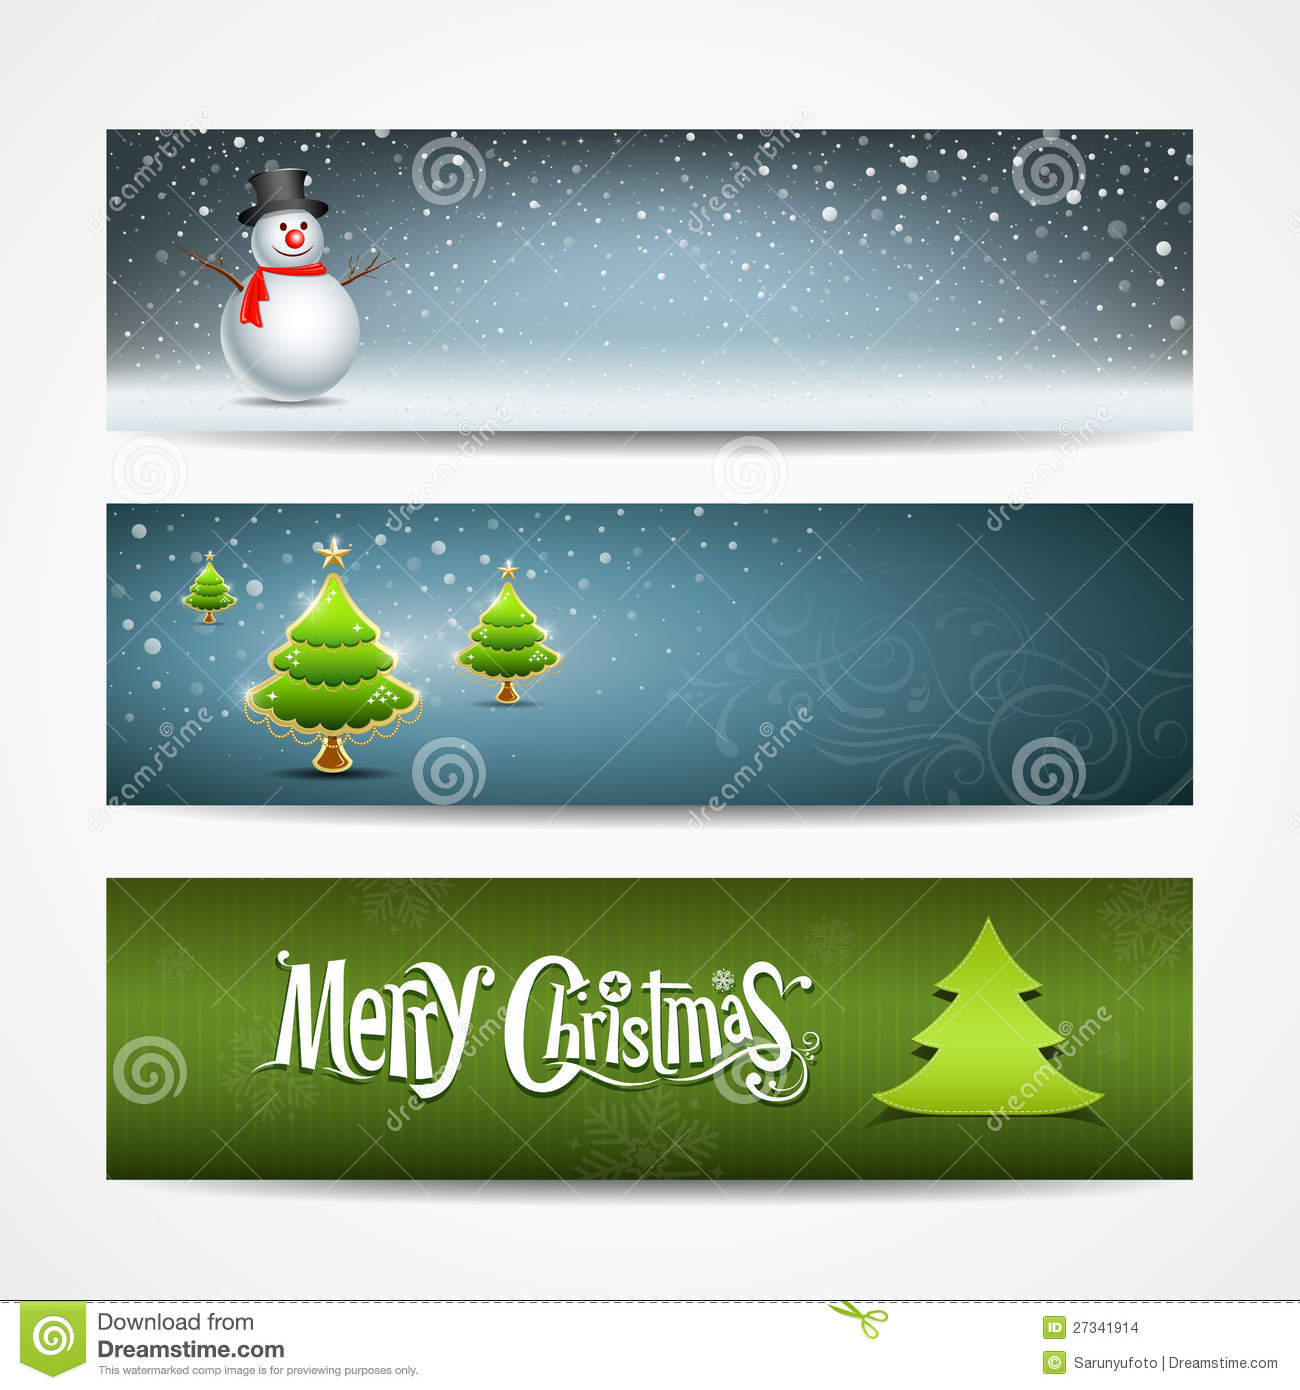 Merry Christmas Banners Horizontal Design Background Set Illustration